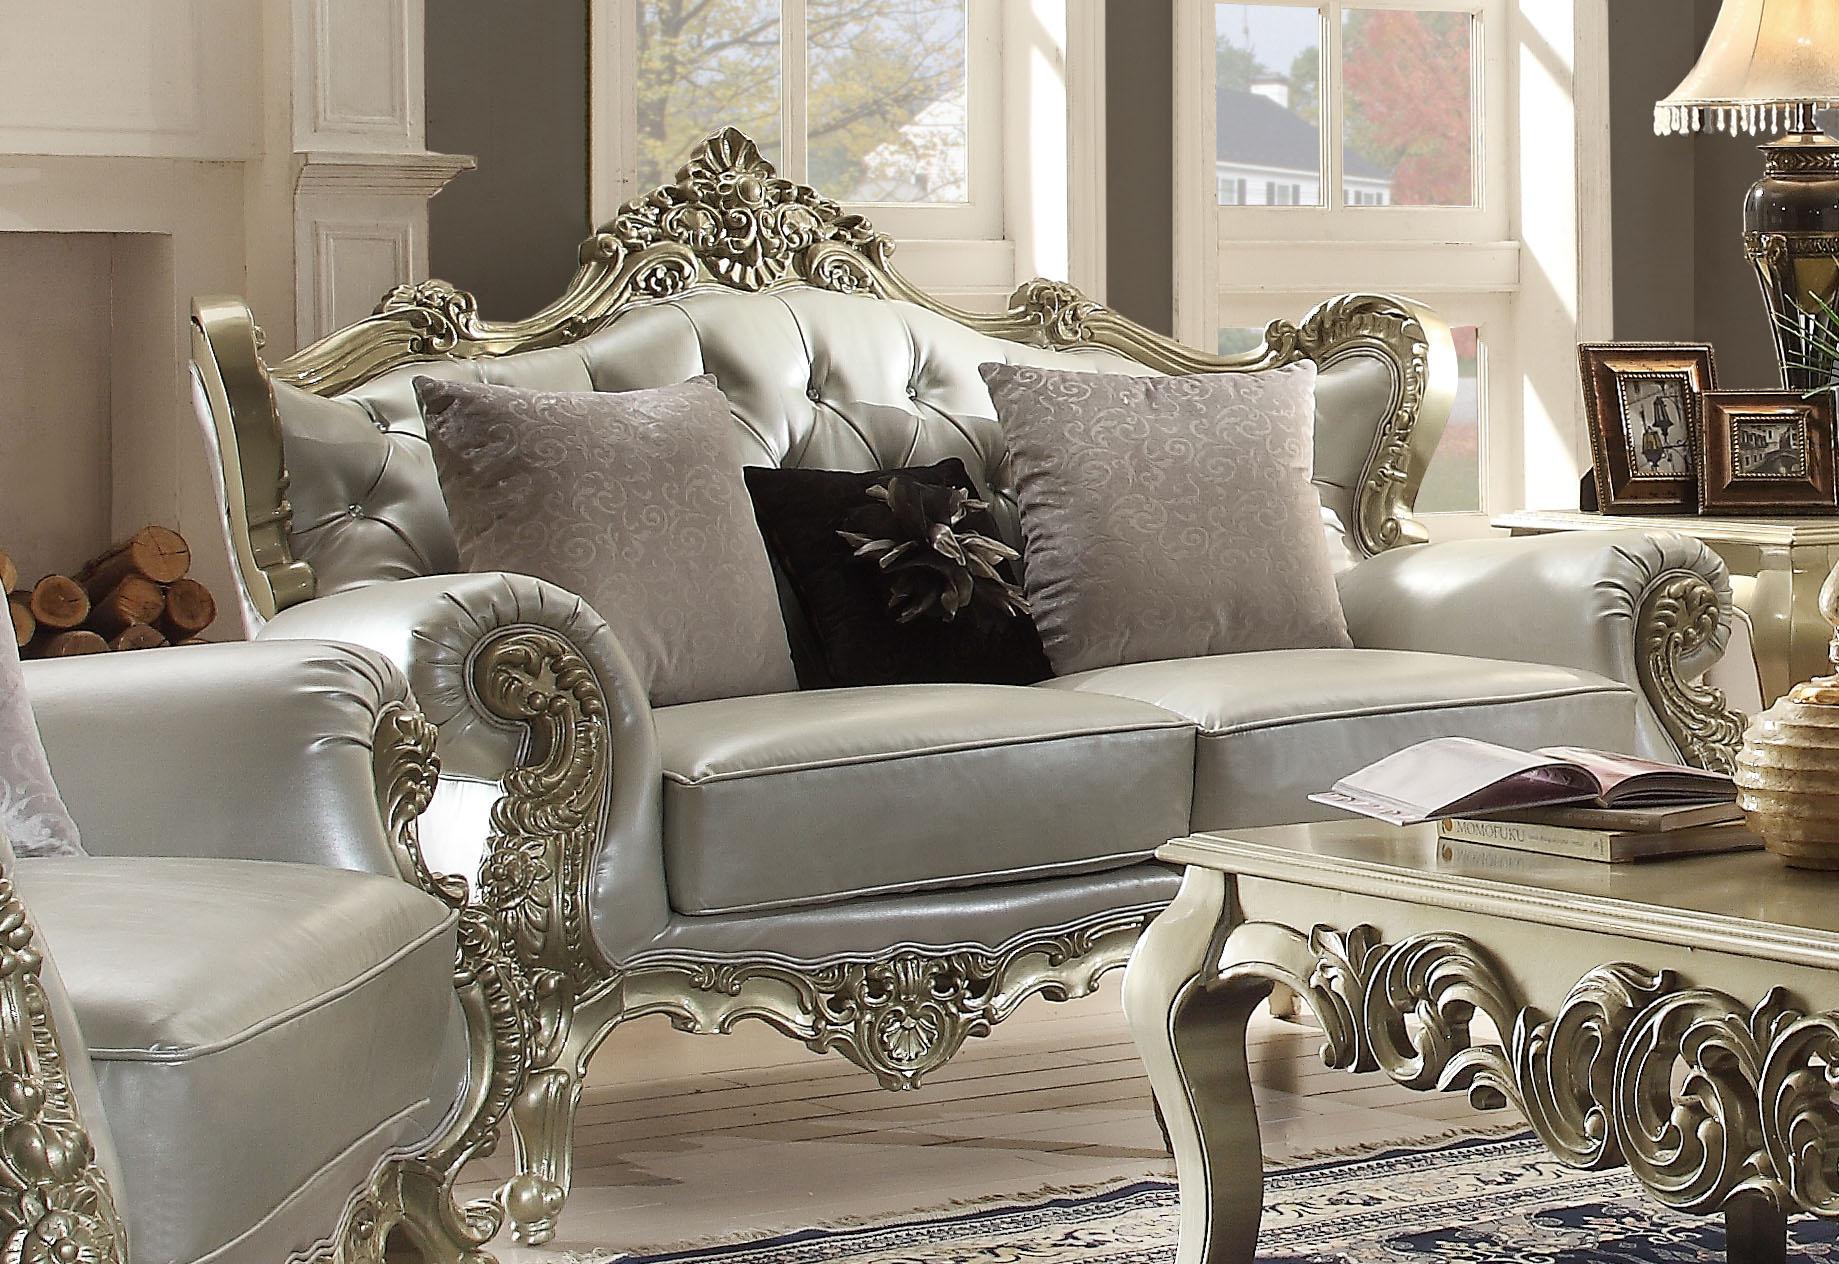 

    
Homey Design Furniture HD-13006 – 3PC SOFA SET Sofa Loveseat and Chair Silver HD-13006-SSET3
